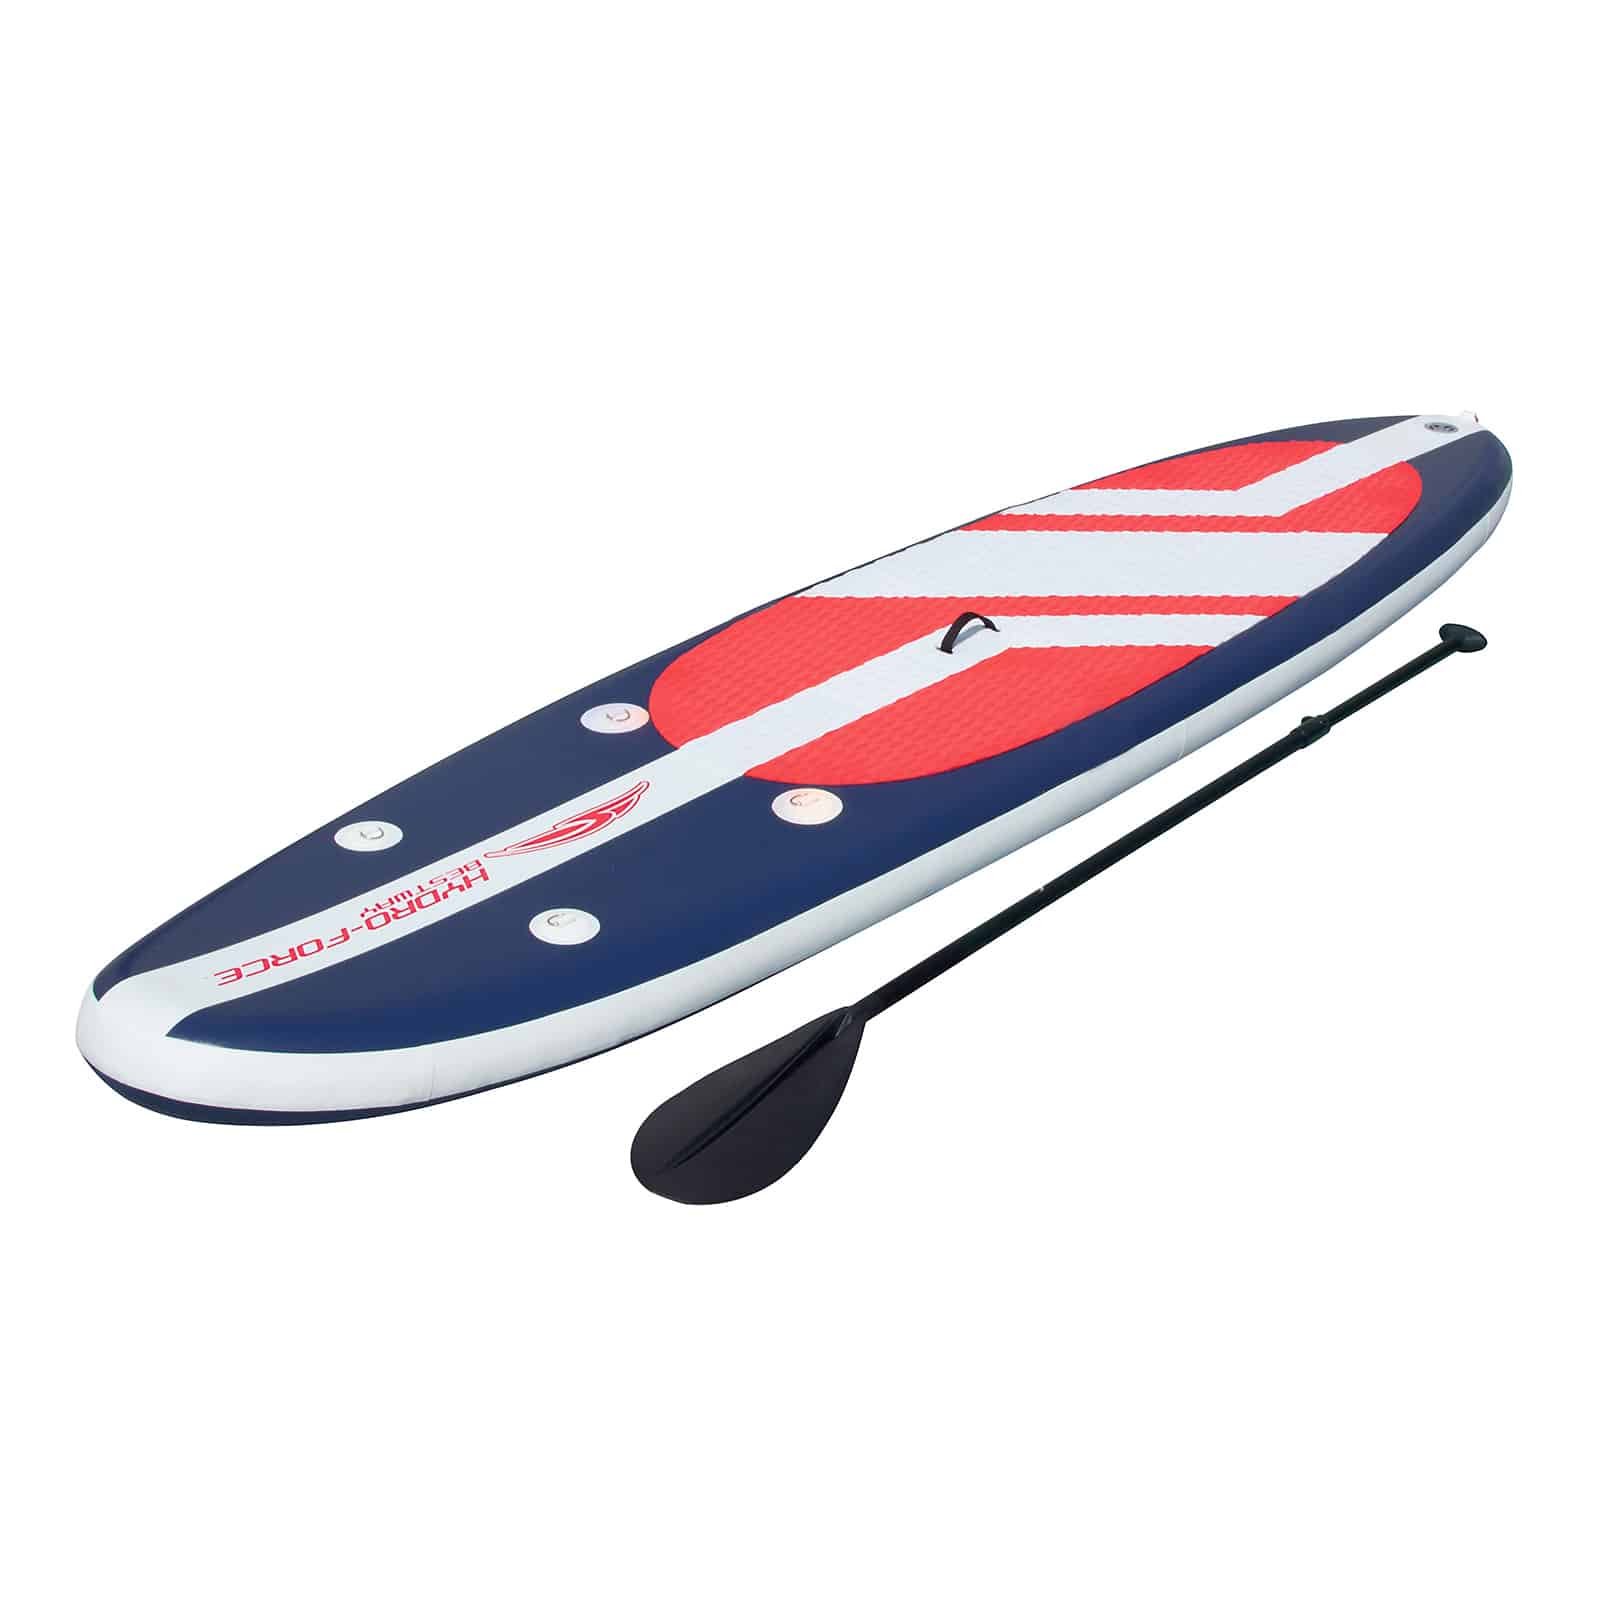 Tabla Paddle Surf Hinchable Bestway Hydro-force Long Tail 335x76x15 Cm Con Remo, Bomba Y Bolsa - multicolor - 